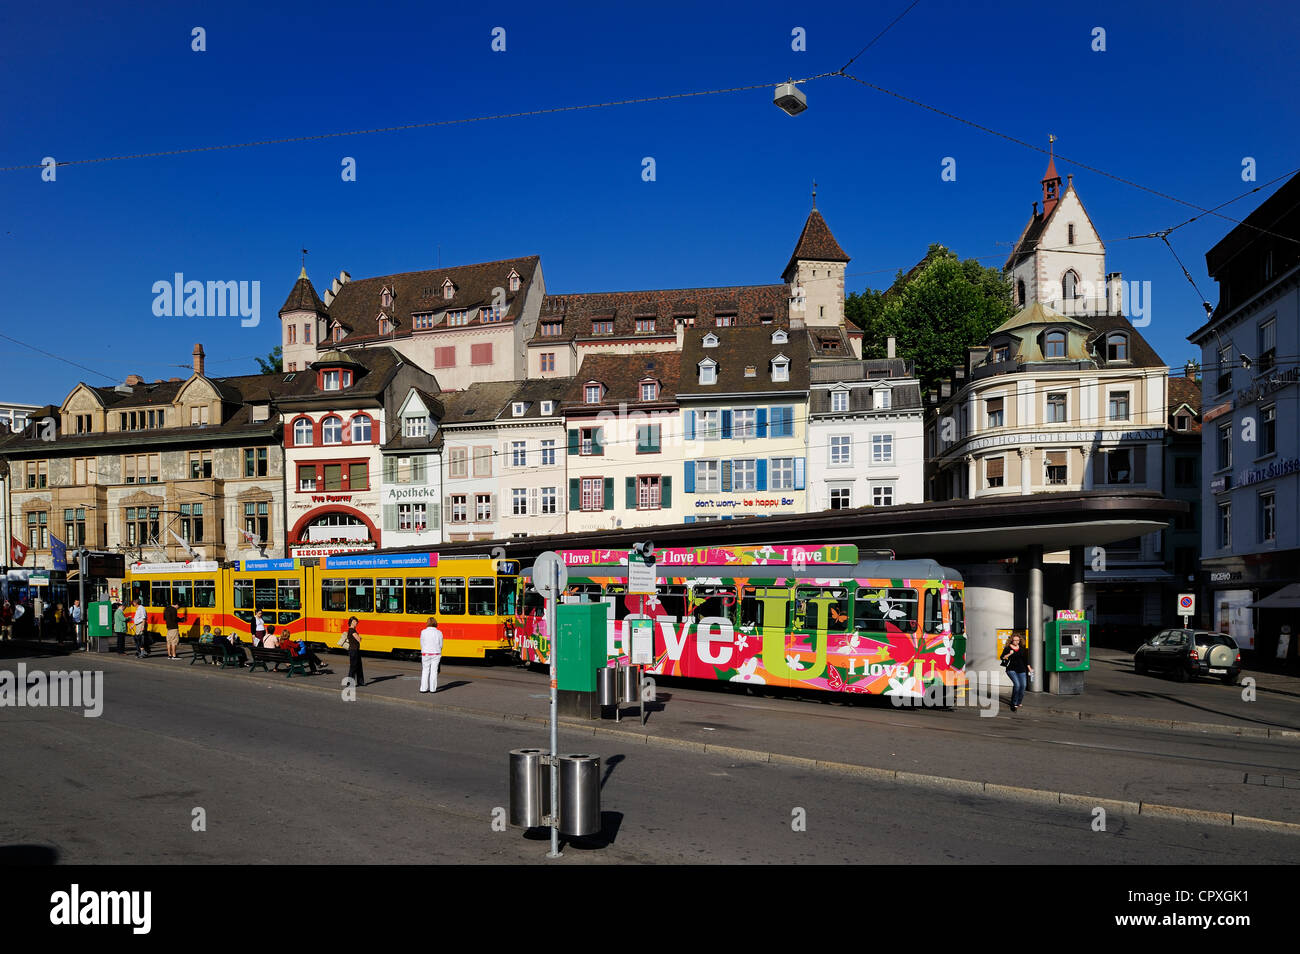 La Svizzera, Basilea, tram sulla Barfüsserplatz dominata dalla chiesa Leonhards Foto Stock